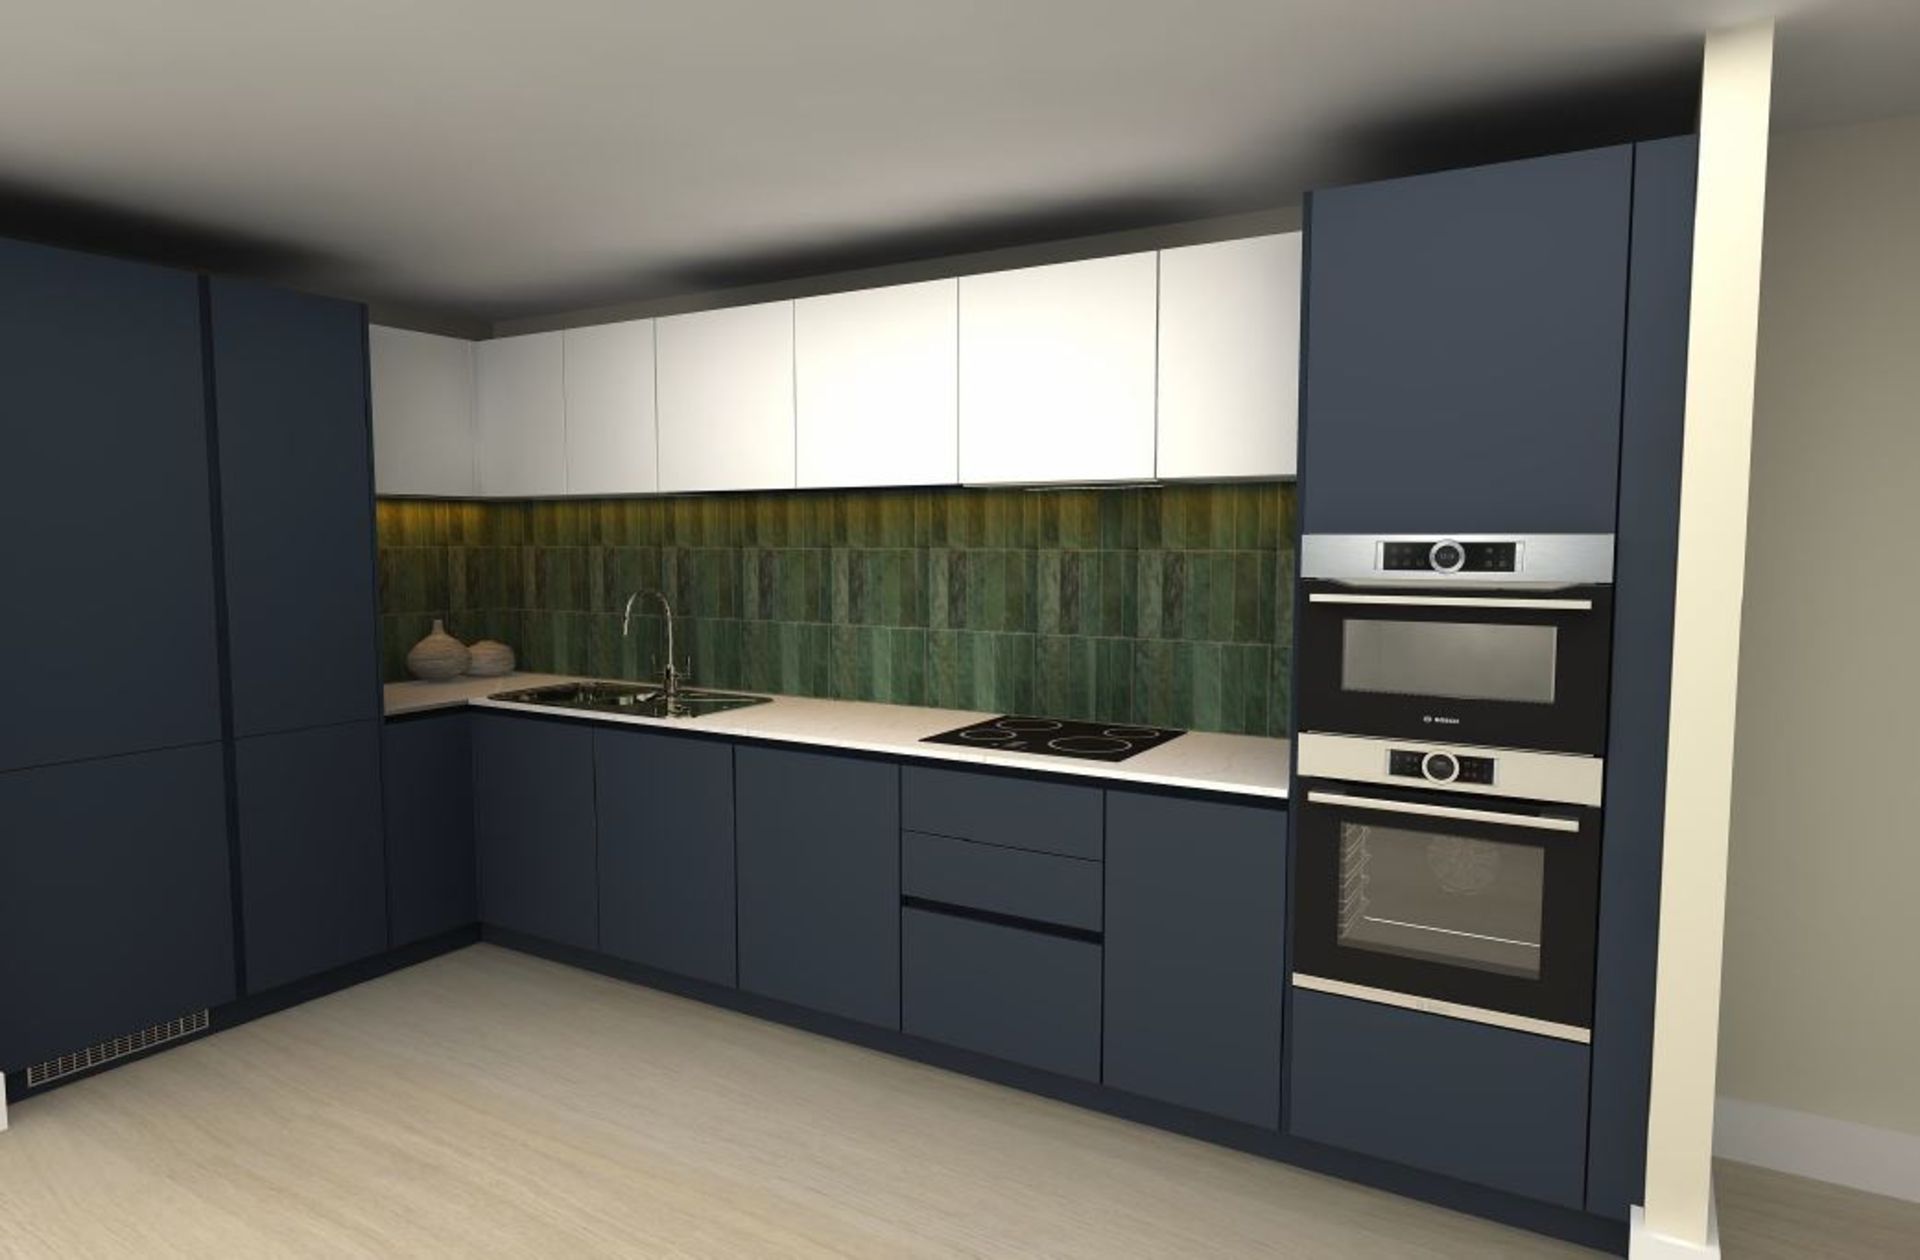 New/Unused Hatt kitchen comprising: Lacquered melamine flat panel doors in Egger Indigo Blue perfect